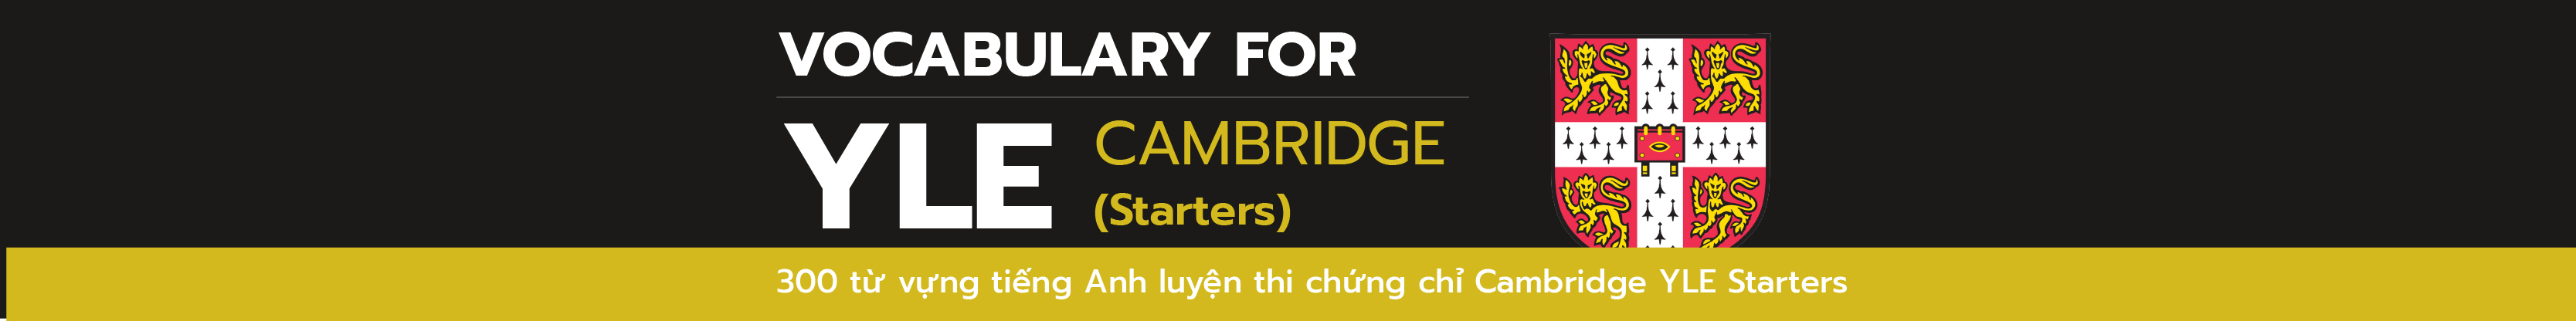 VOCA FOR CAMBRIDGE YLE (STARTERS)